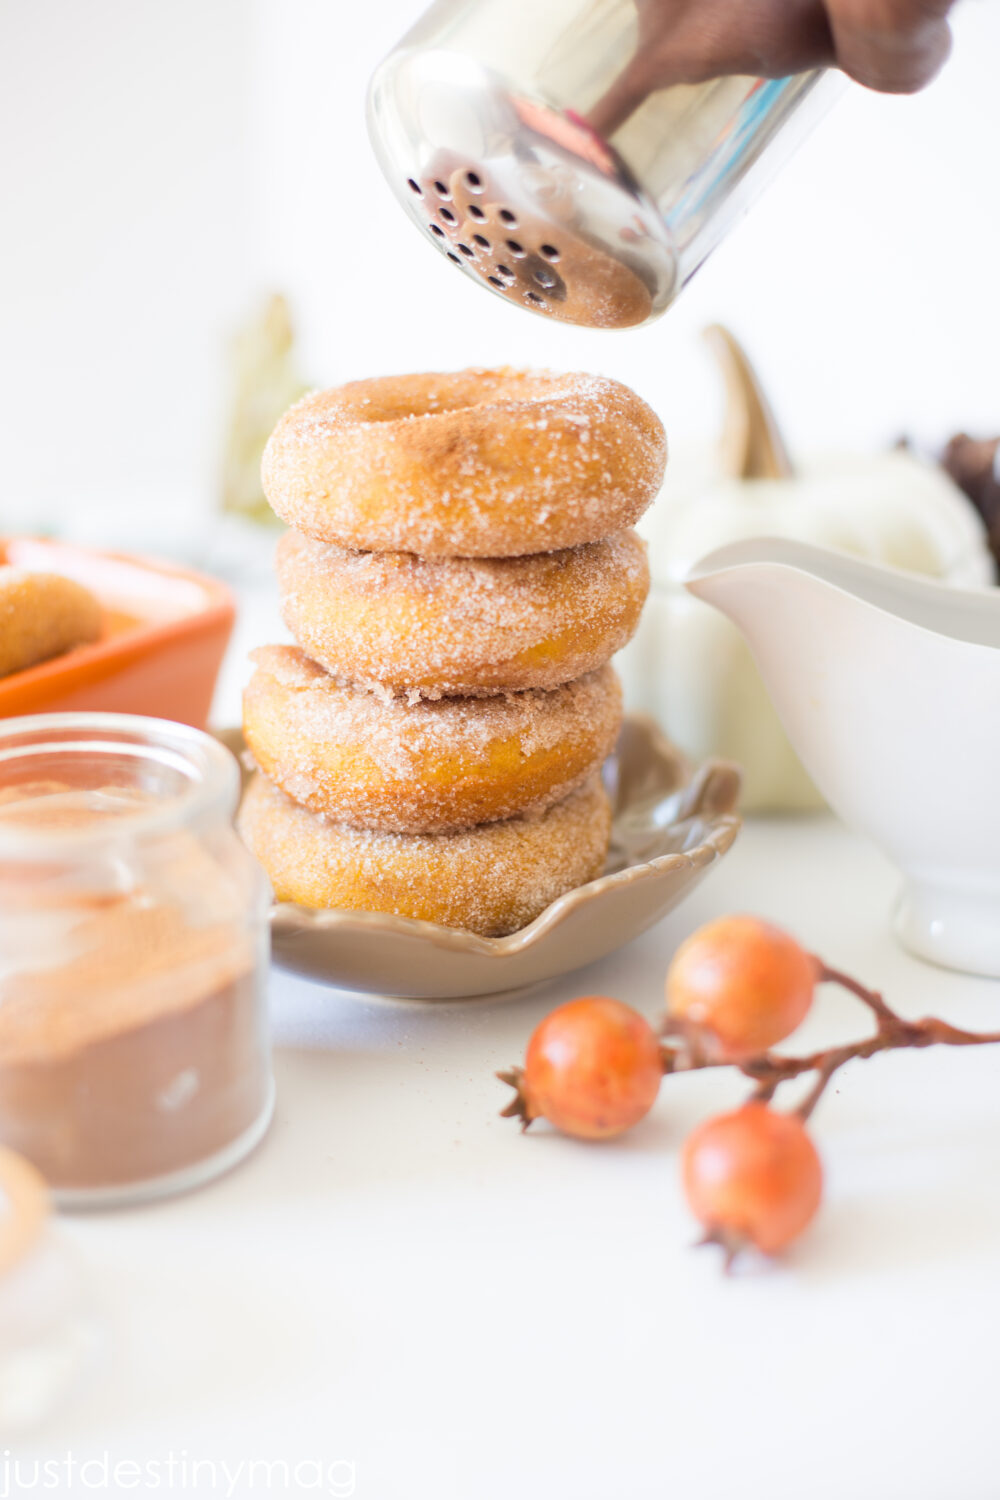 Infused Pumpkin Donuts with Sugar and Cinnamon Coating